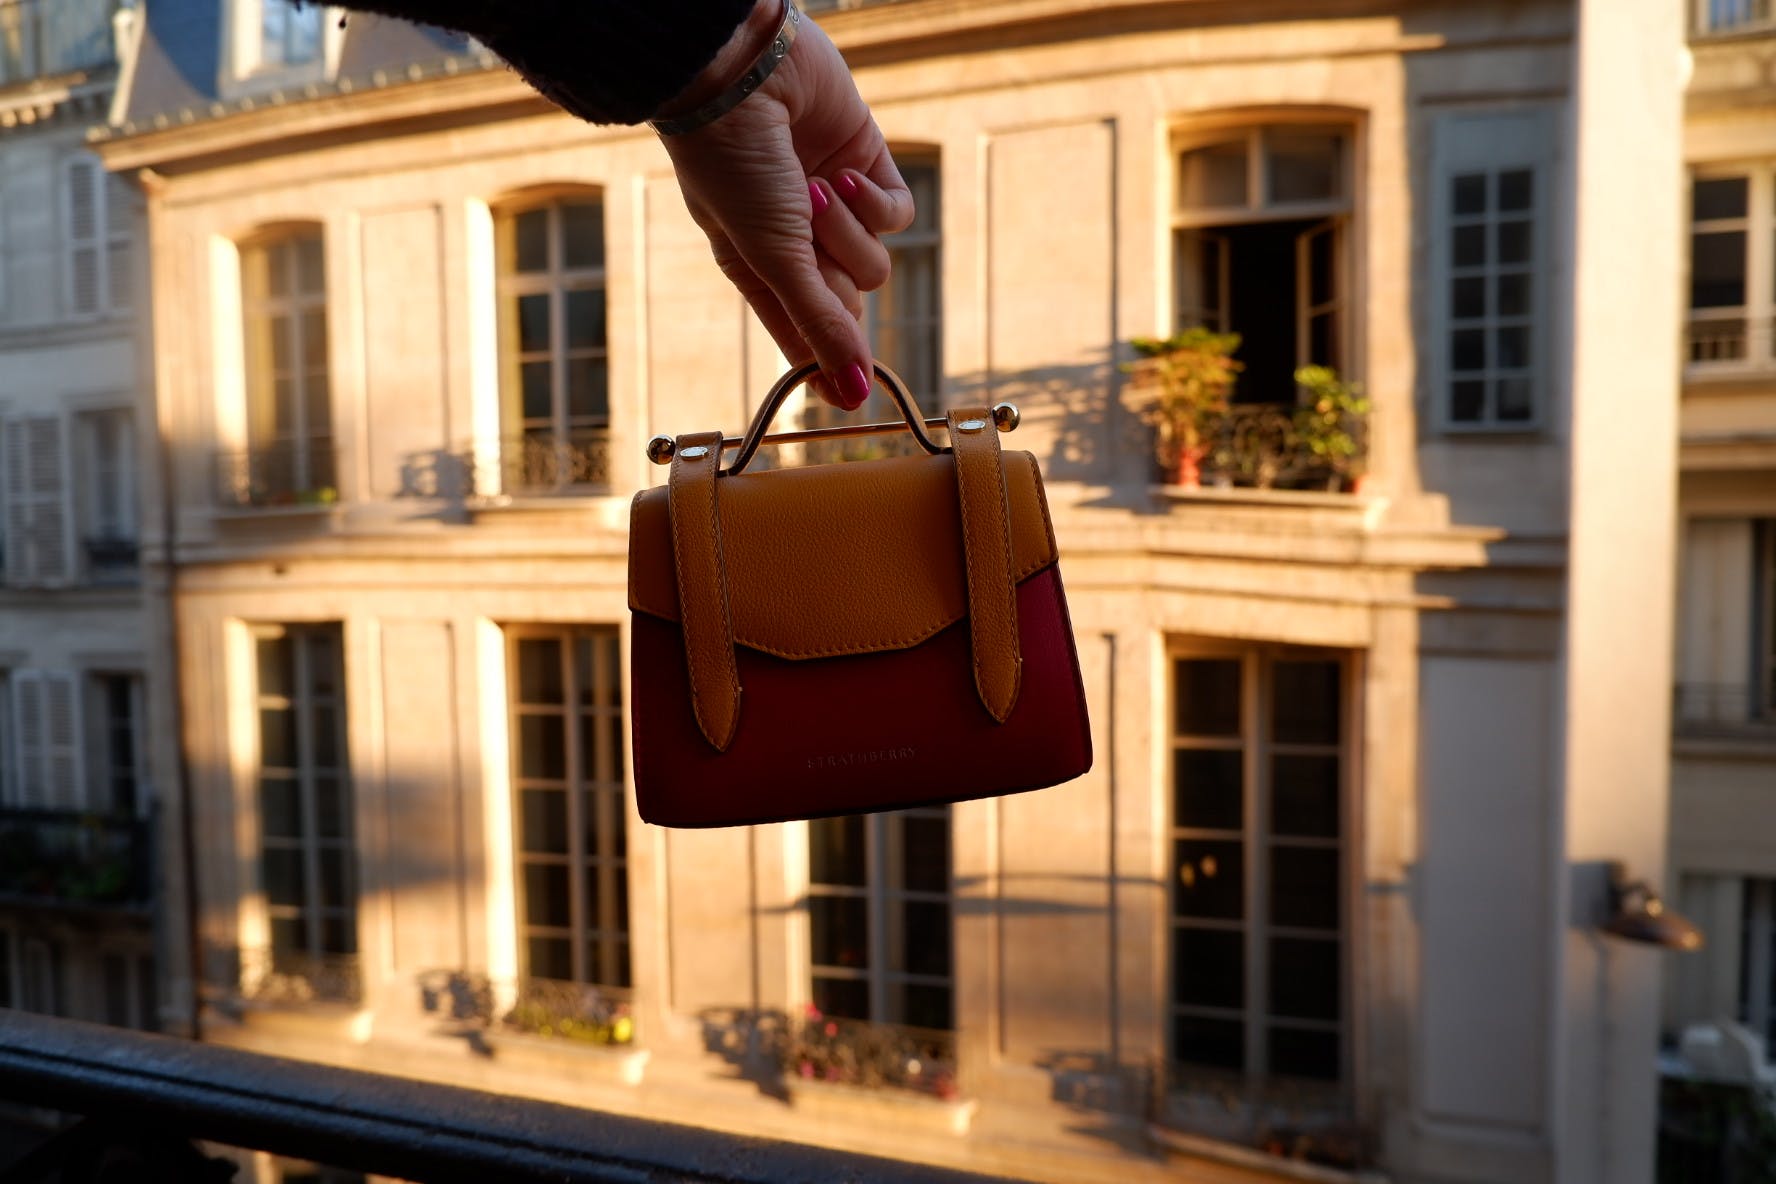 Jacquemus handbags: Giant Jacquemus handbags ride on the streets of Paris,  watch video - The Economic Times